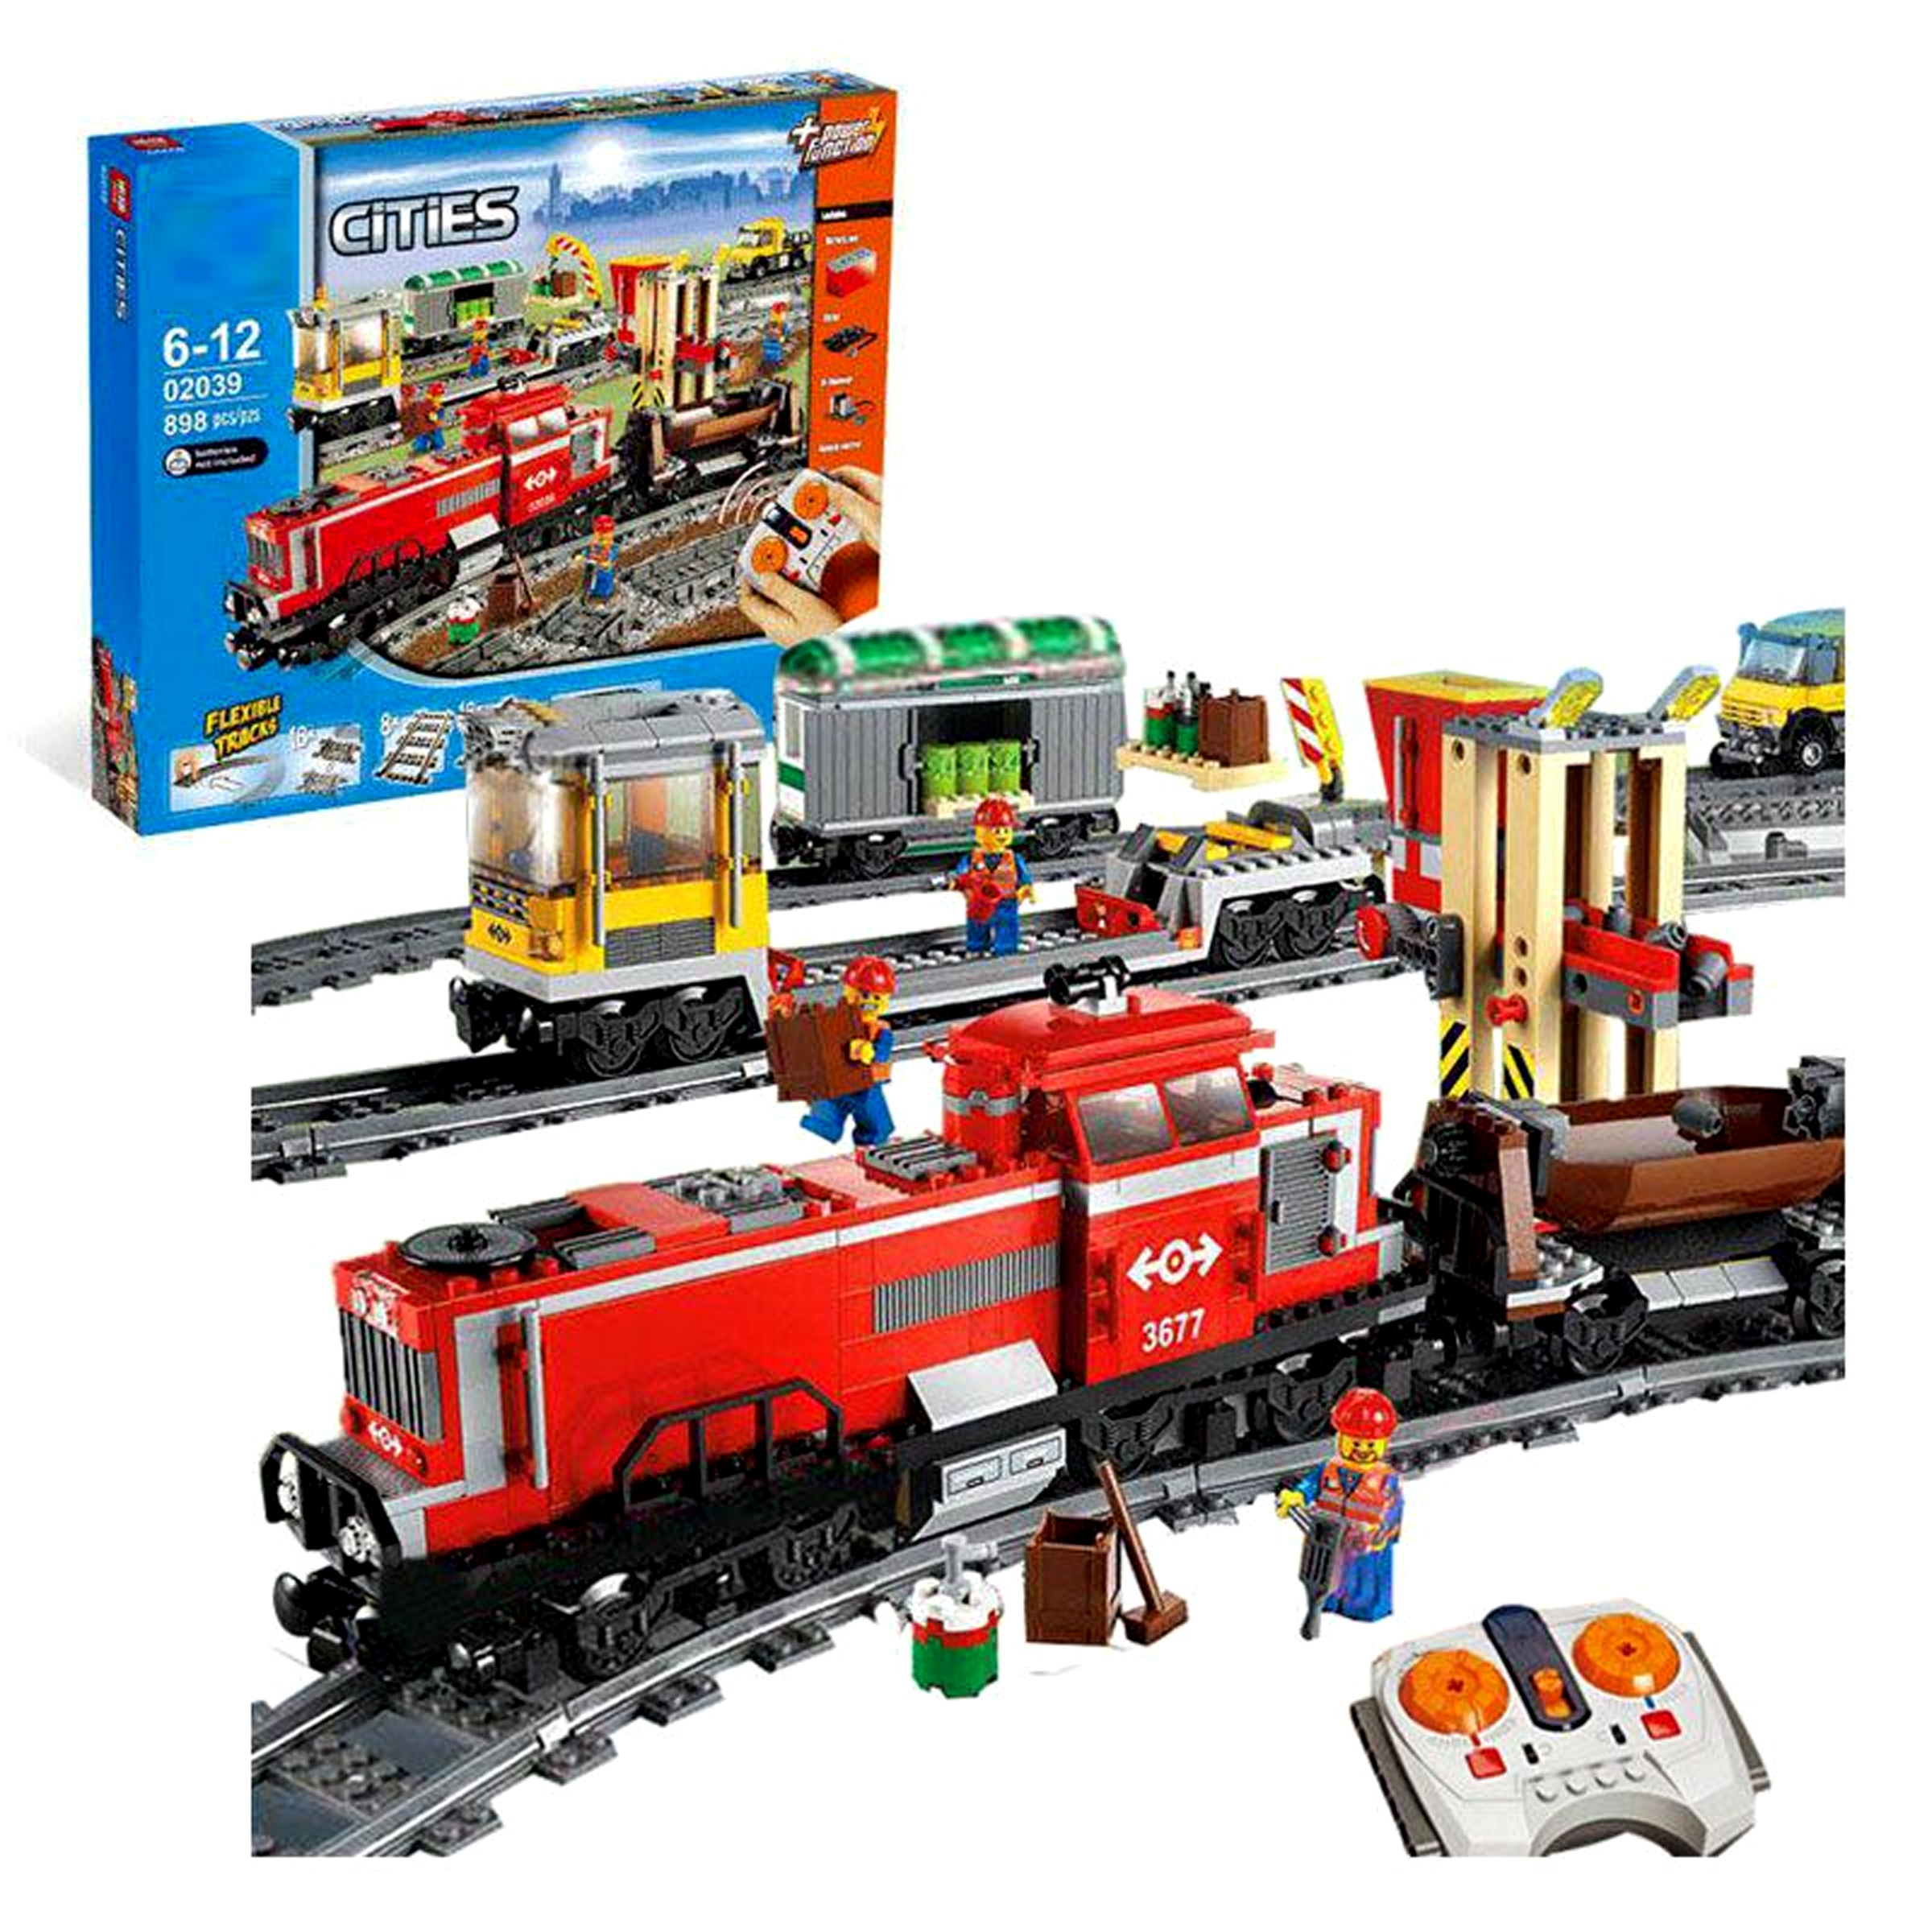 Dolu Children's Building Blocks Train Set, Tracks & Station